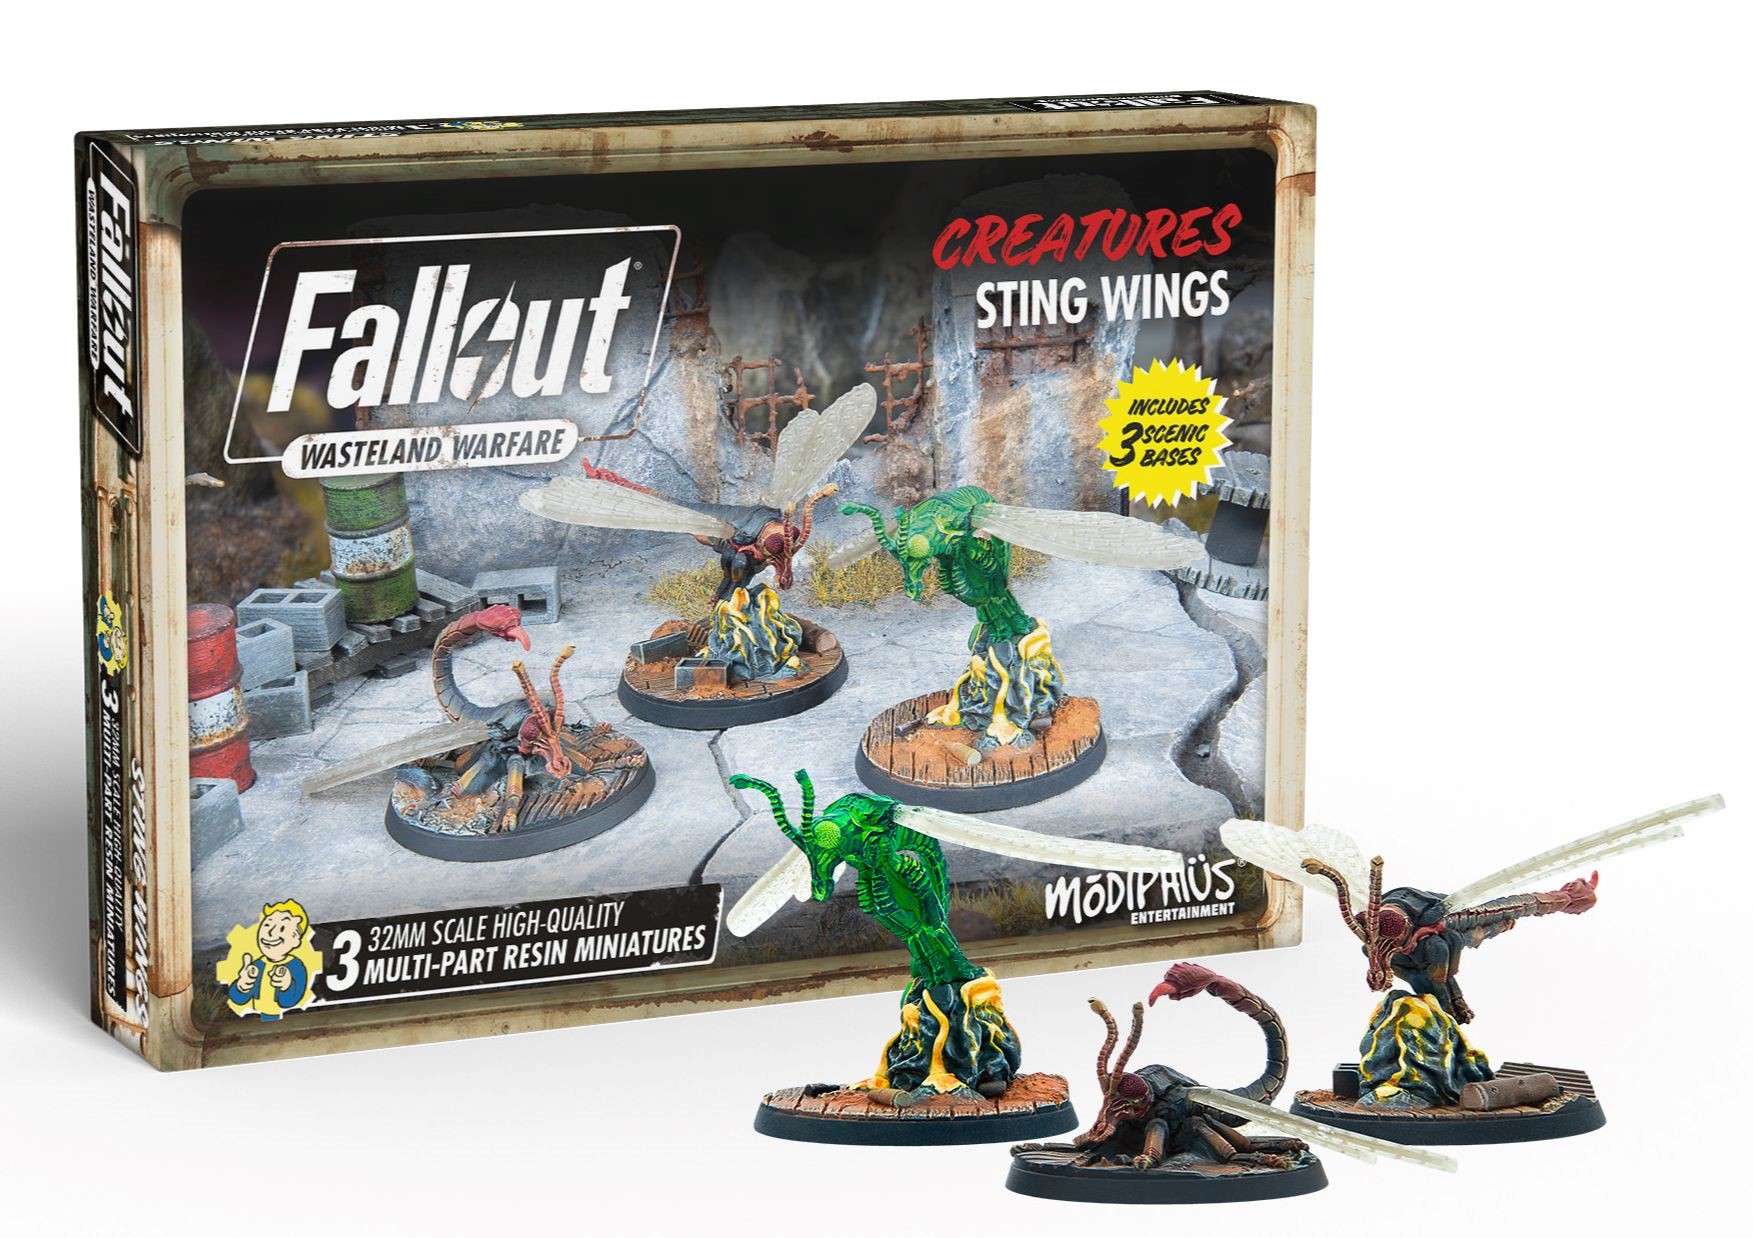 Fallout Wasteland Warfare: Creatures Stingwings 